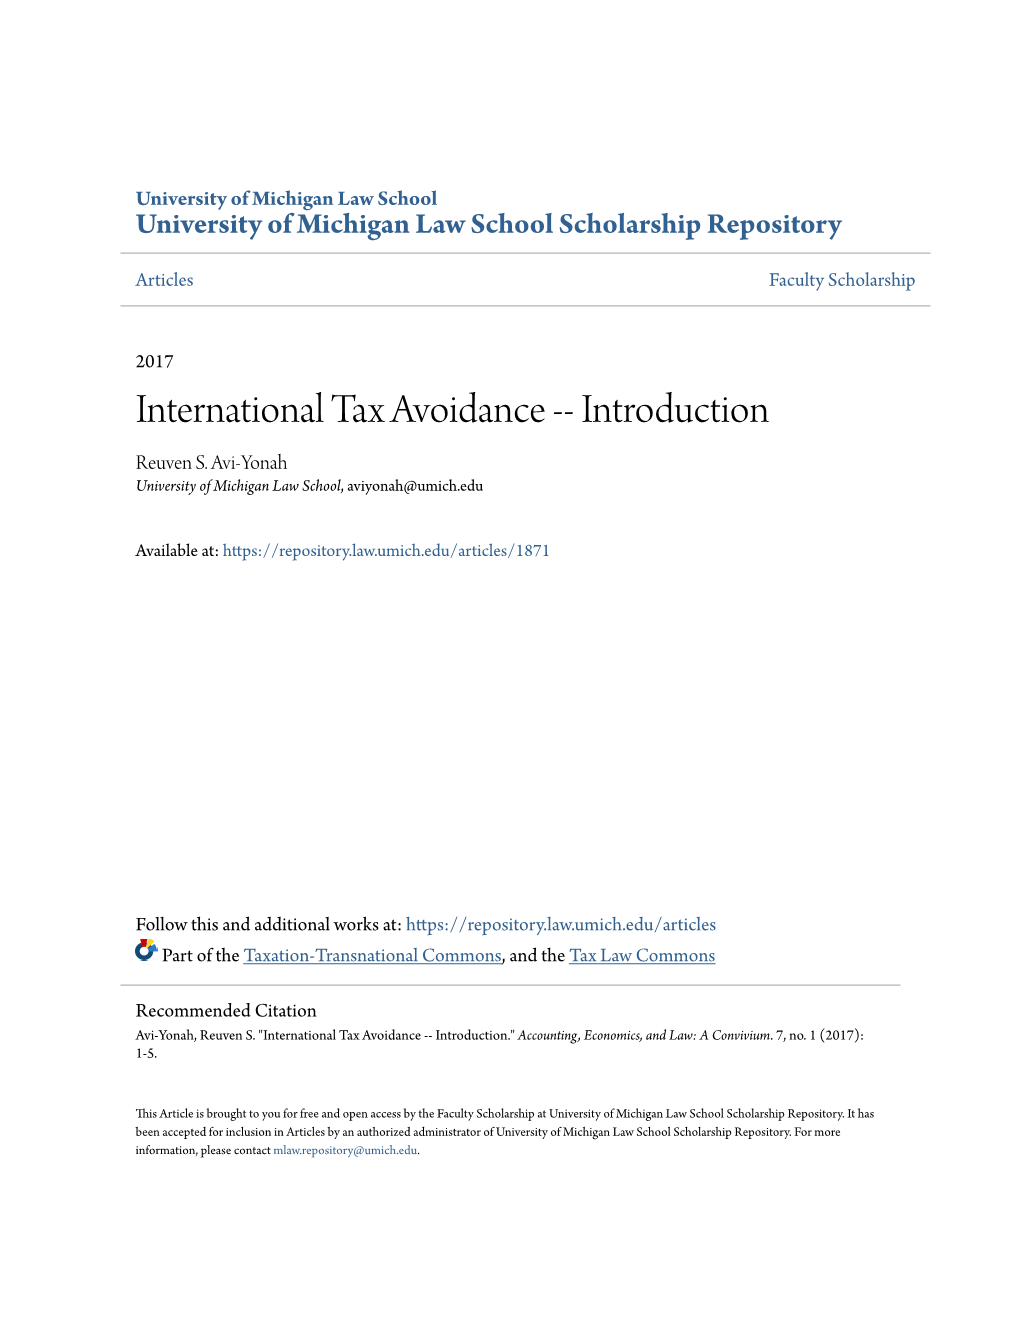 International Tax Avoidance -- Introduction Reuven S